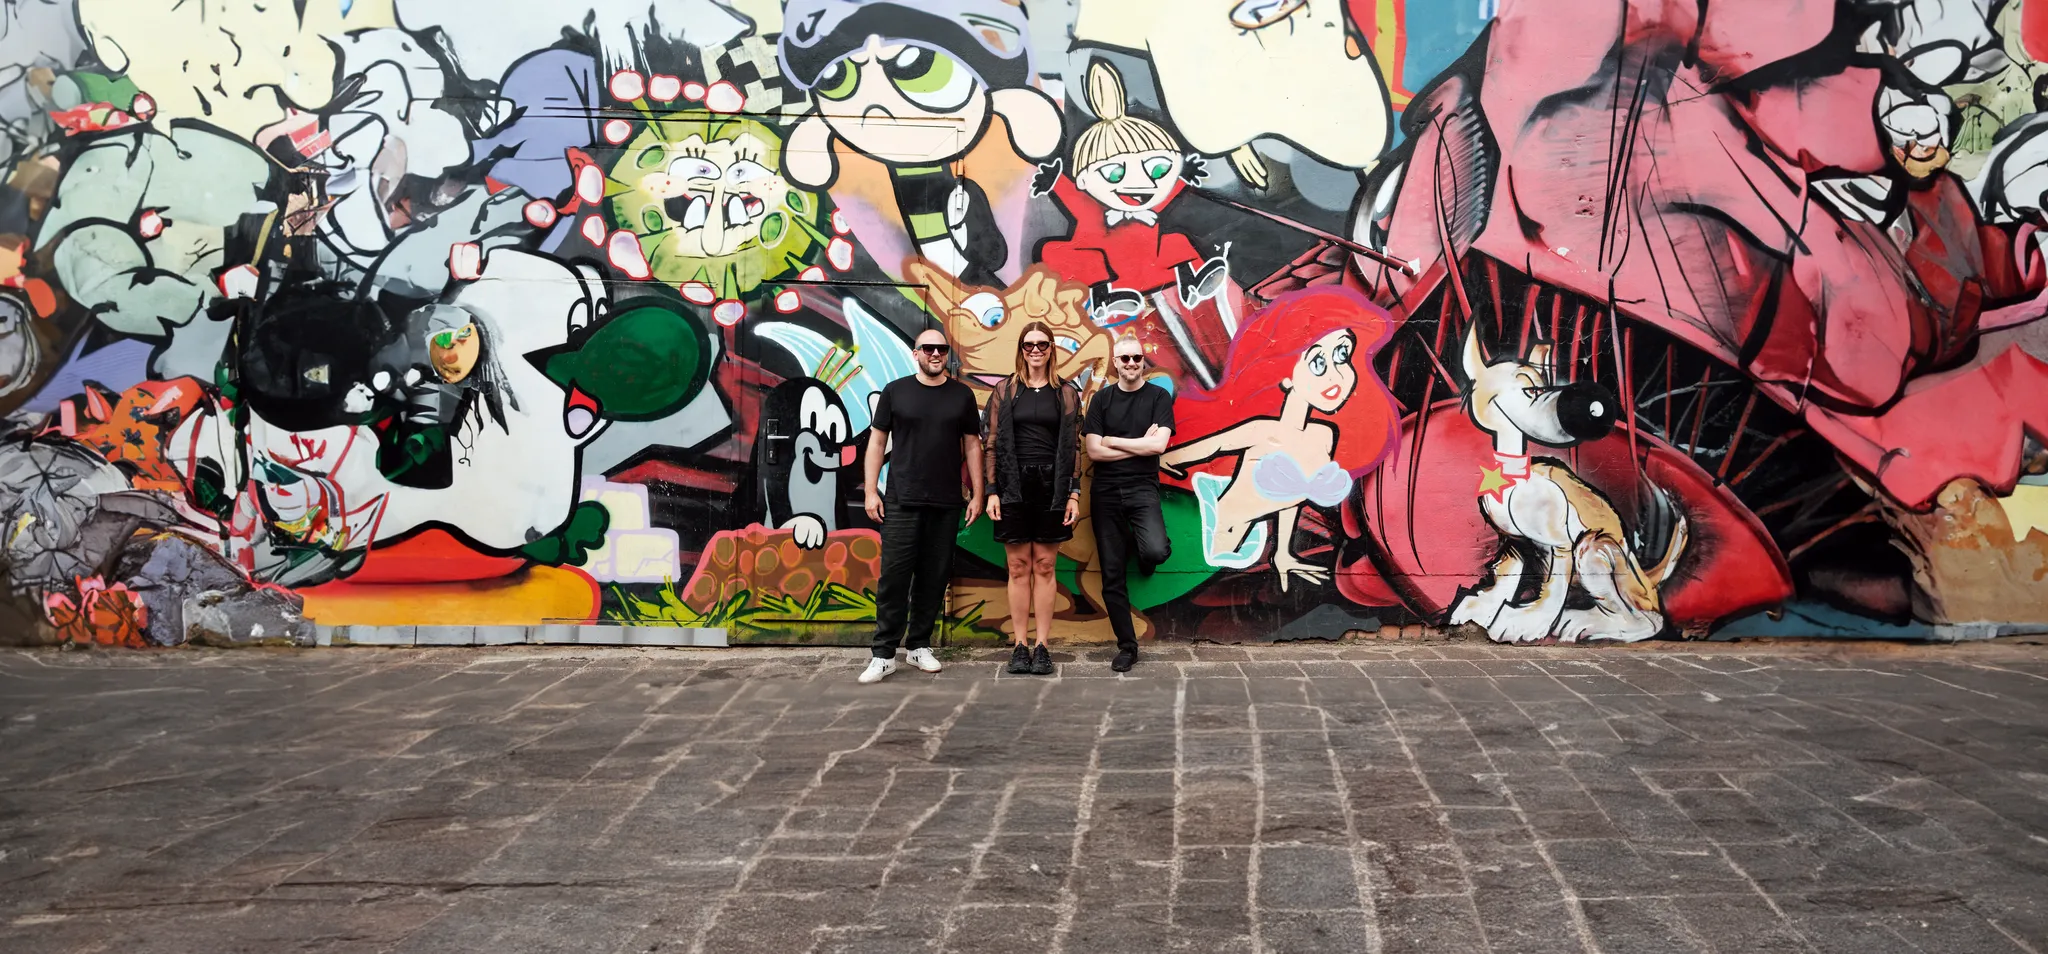 aeo team Anna Lundqvist, Eddy Salzmann and Ola Möller infront of a graffiti wall in Leipzig